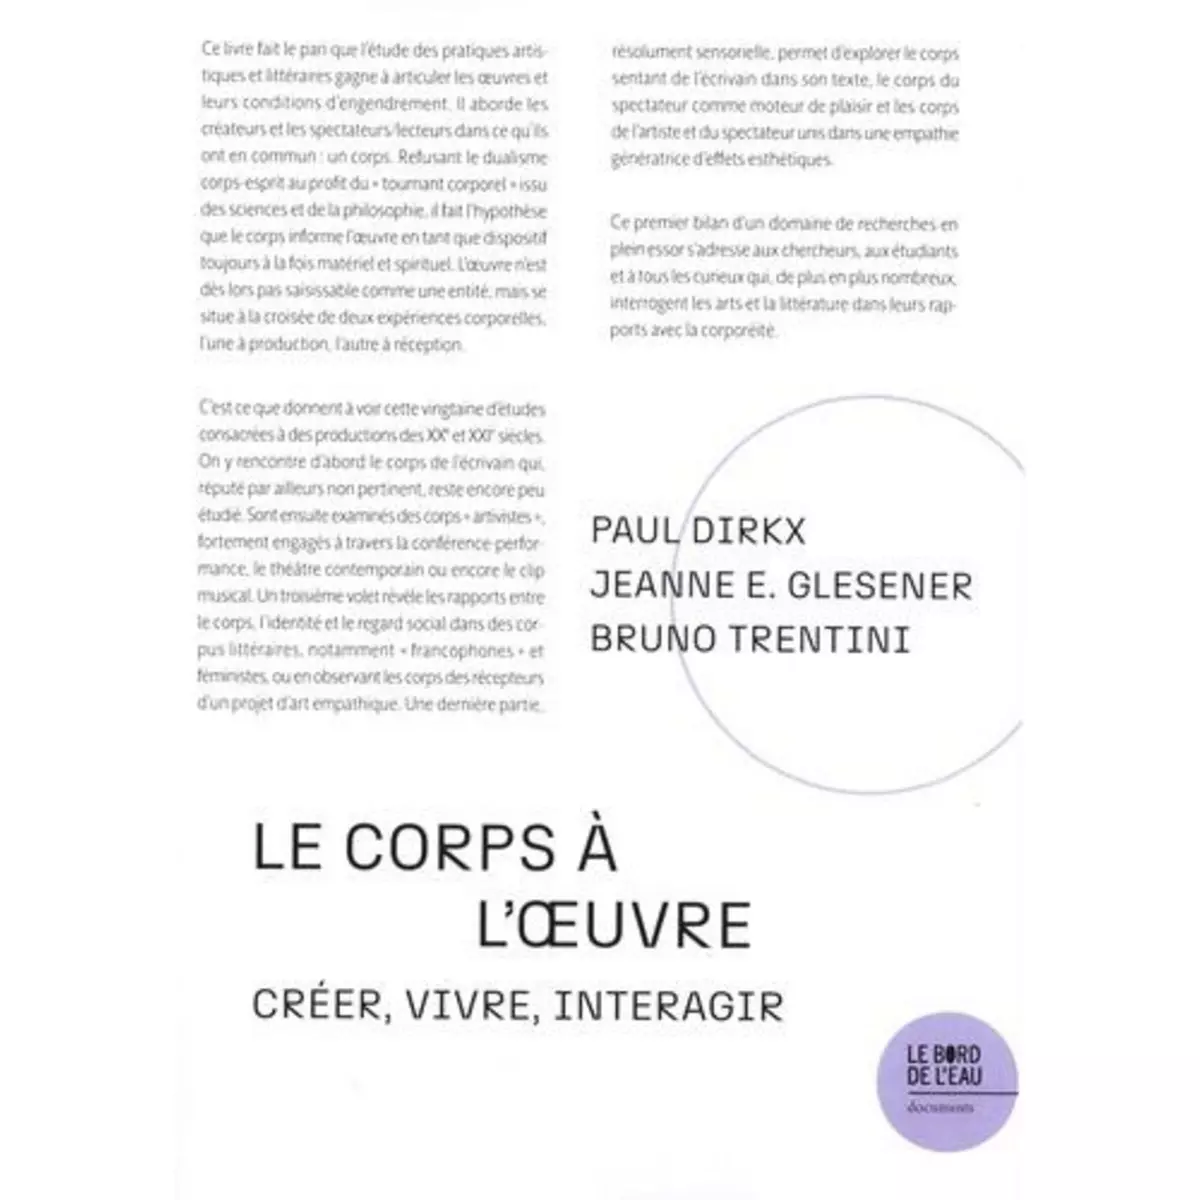  LE CORPS A L'OEUVRE. CREER, VIVRE, INTERAGIR, Dirkx Paul